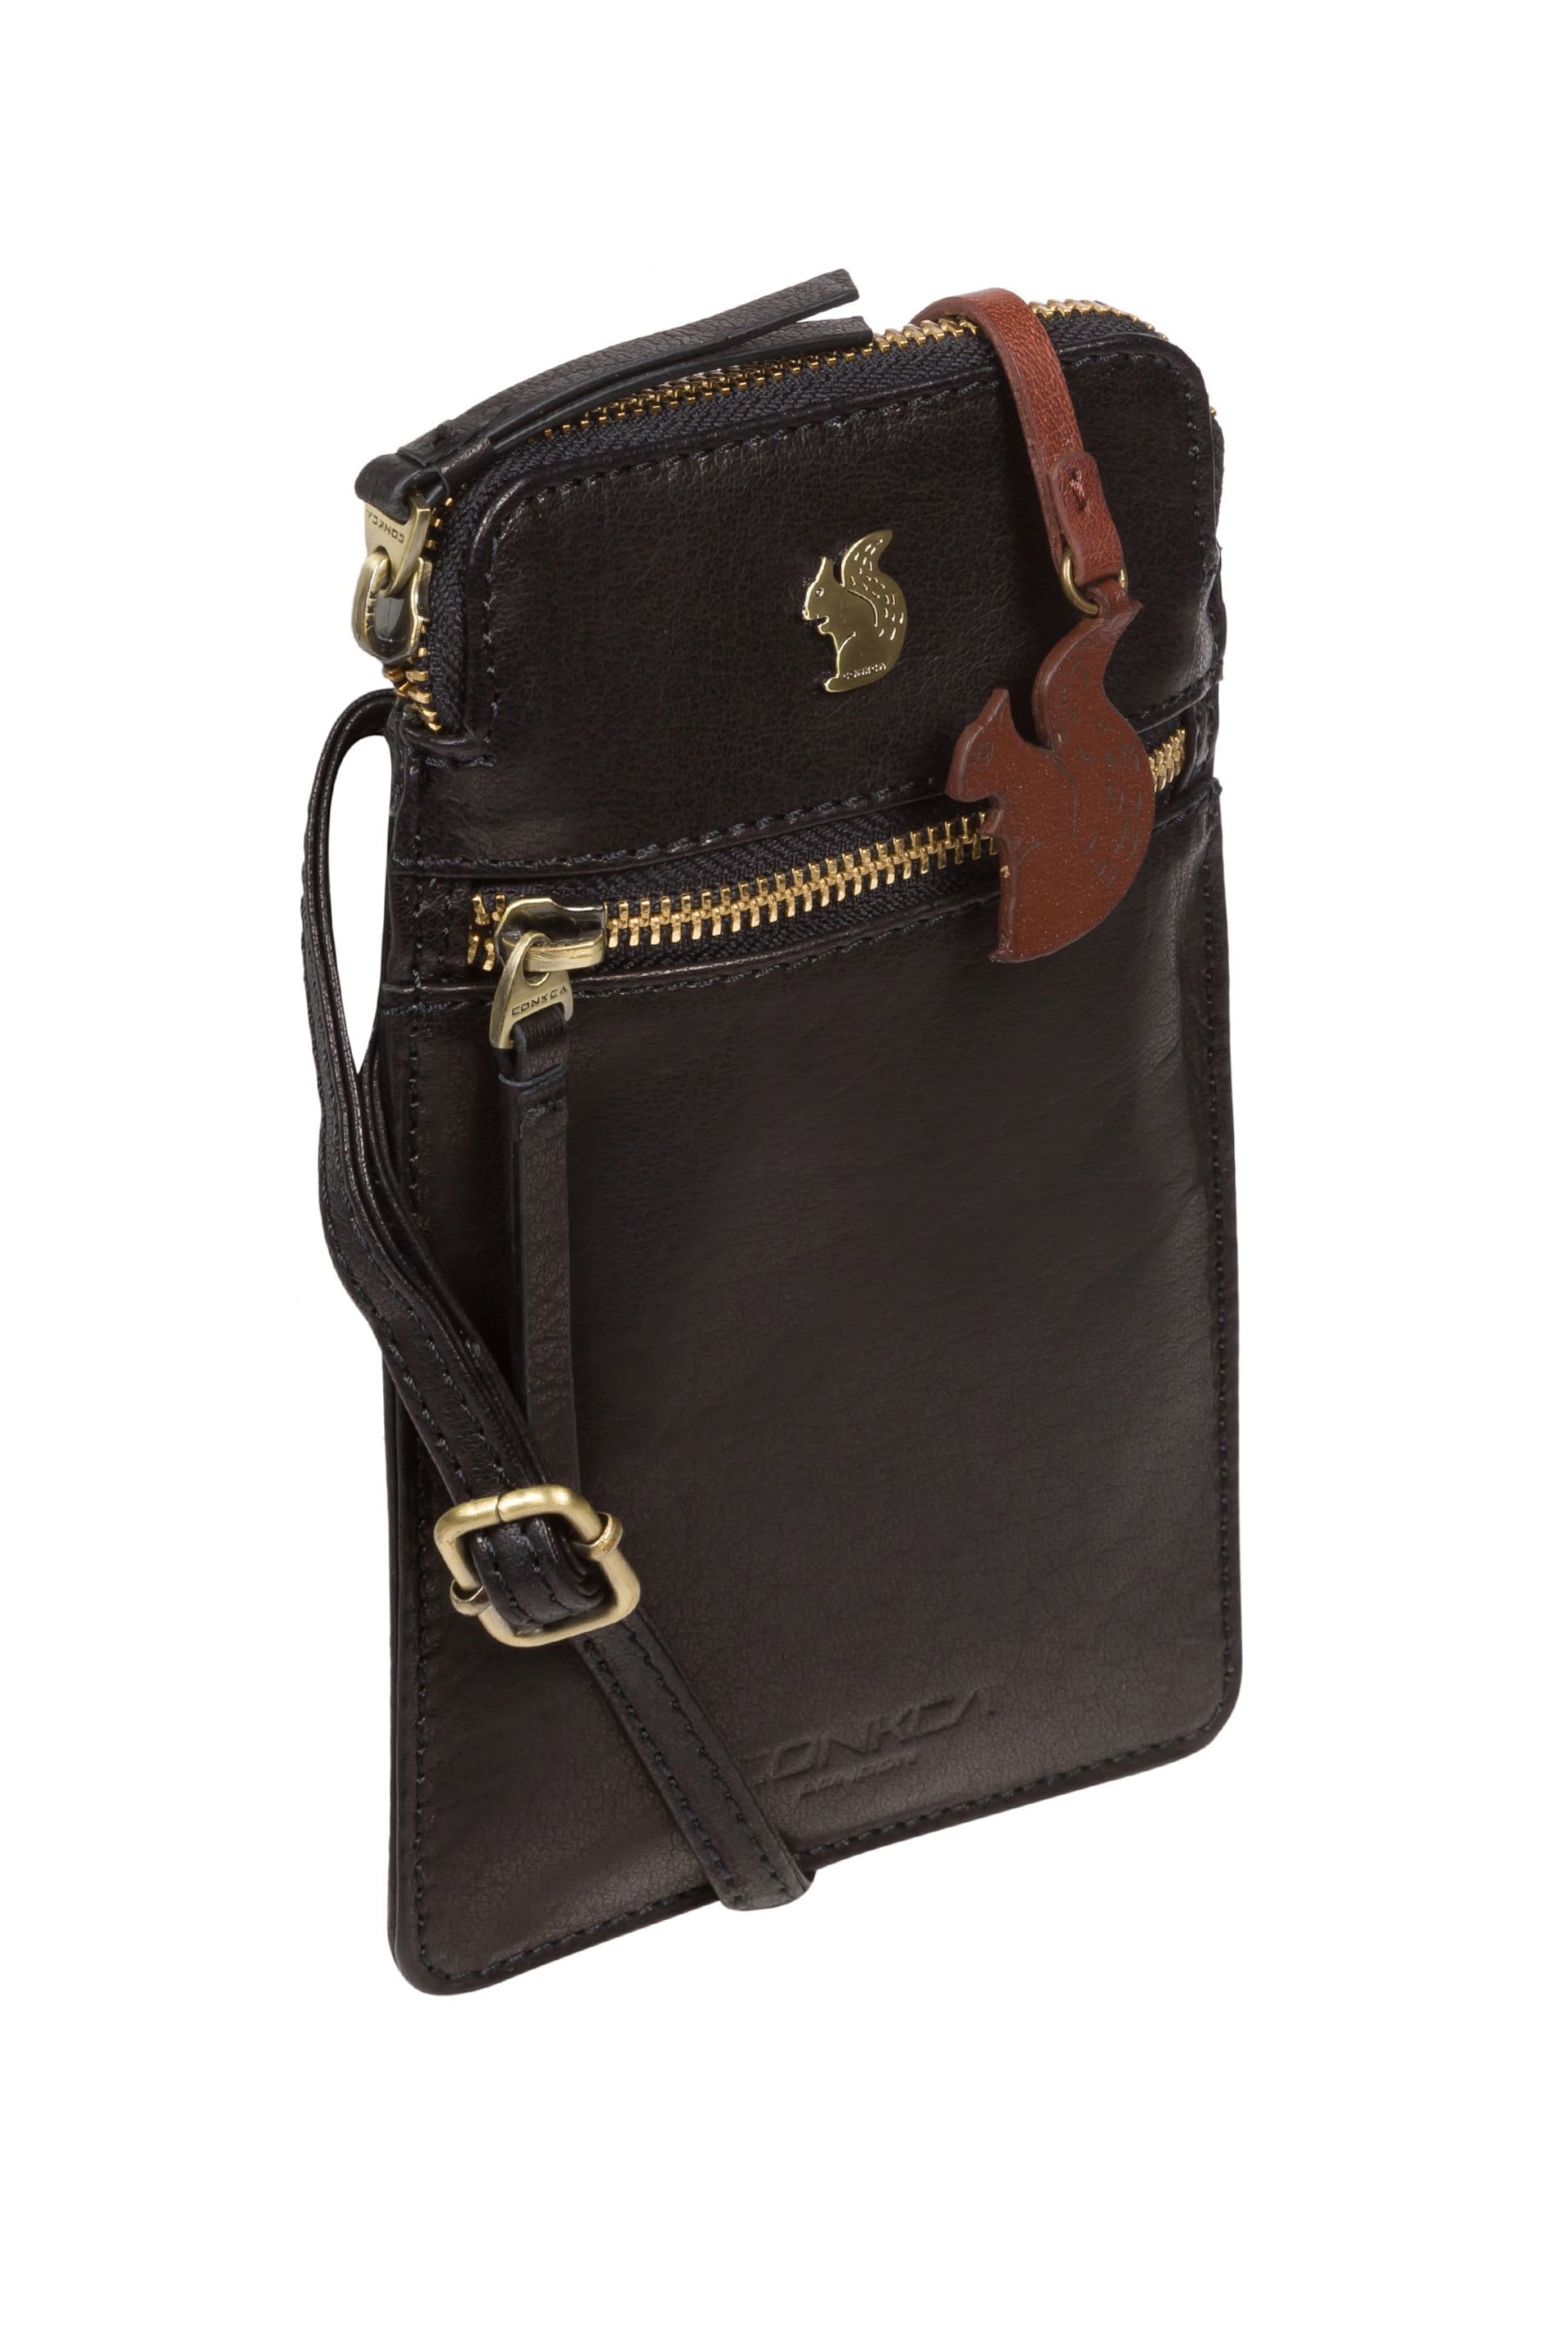 Conkca Bambino Leather Cross-Body Phone Bag - Image 1 of 1